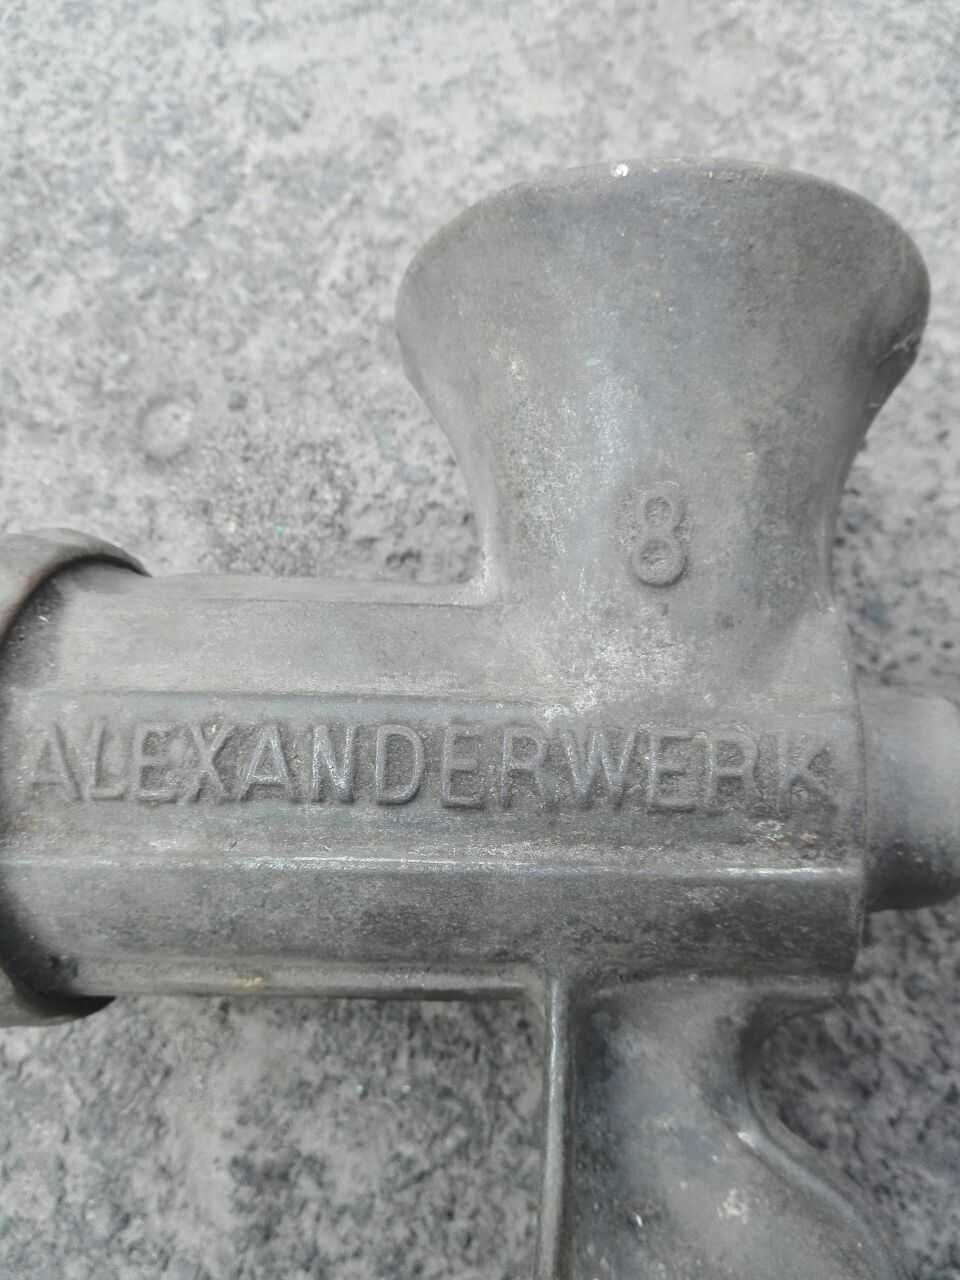 Продам антиквар мясорубку AlexanderWerk 8 40-х годов ТОРГ